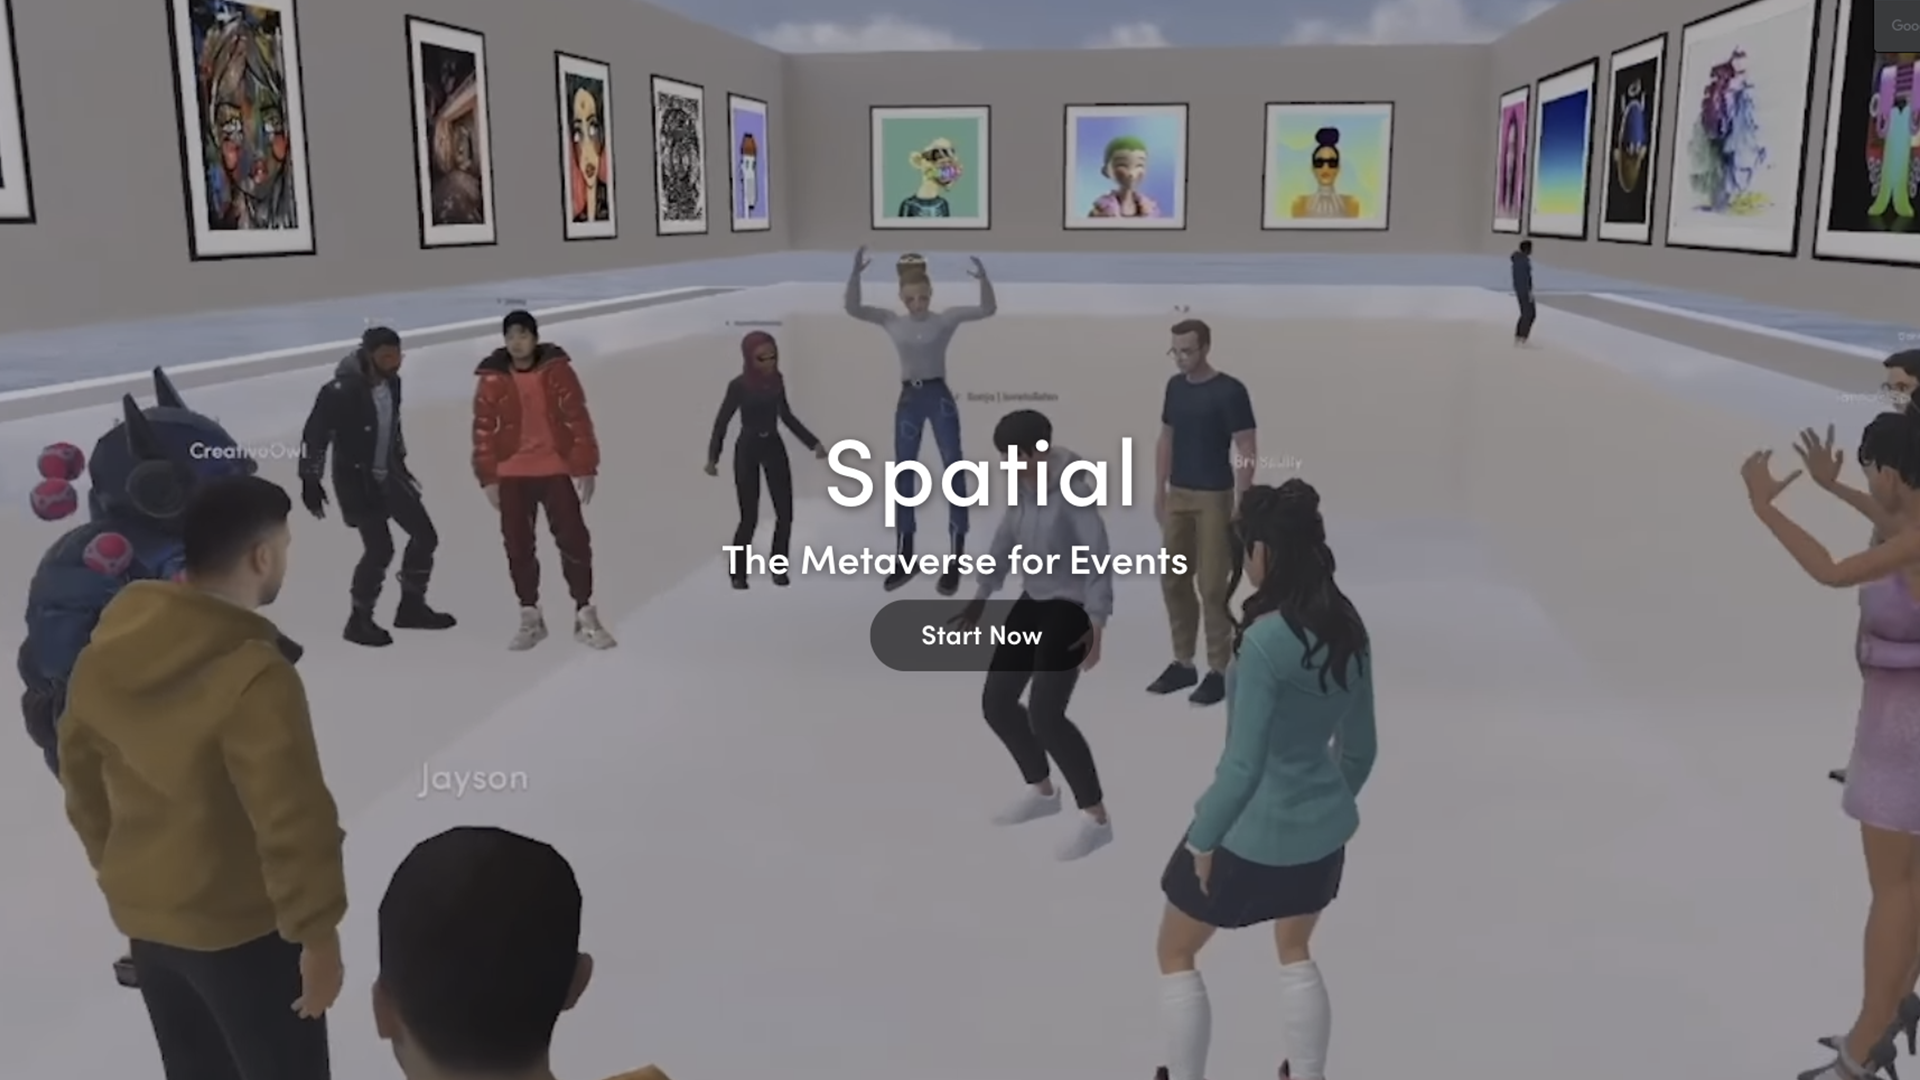 Spatial metaverse 3D avatars